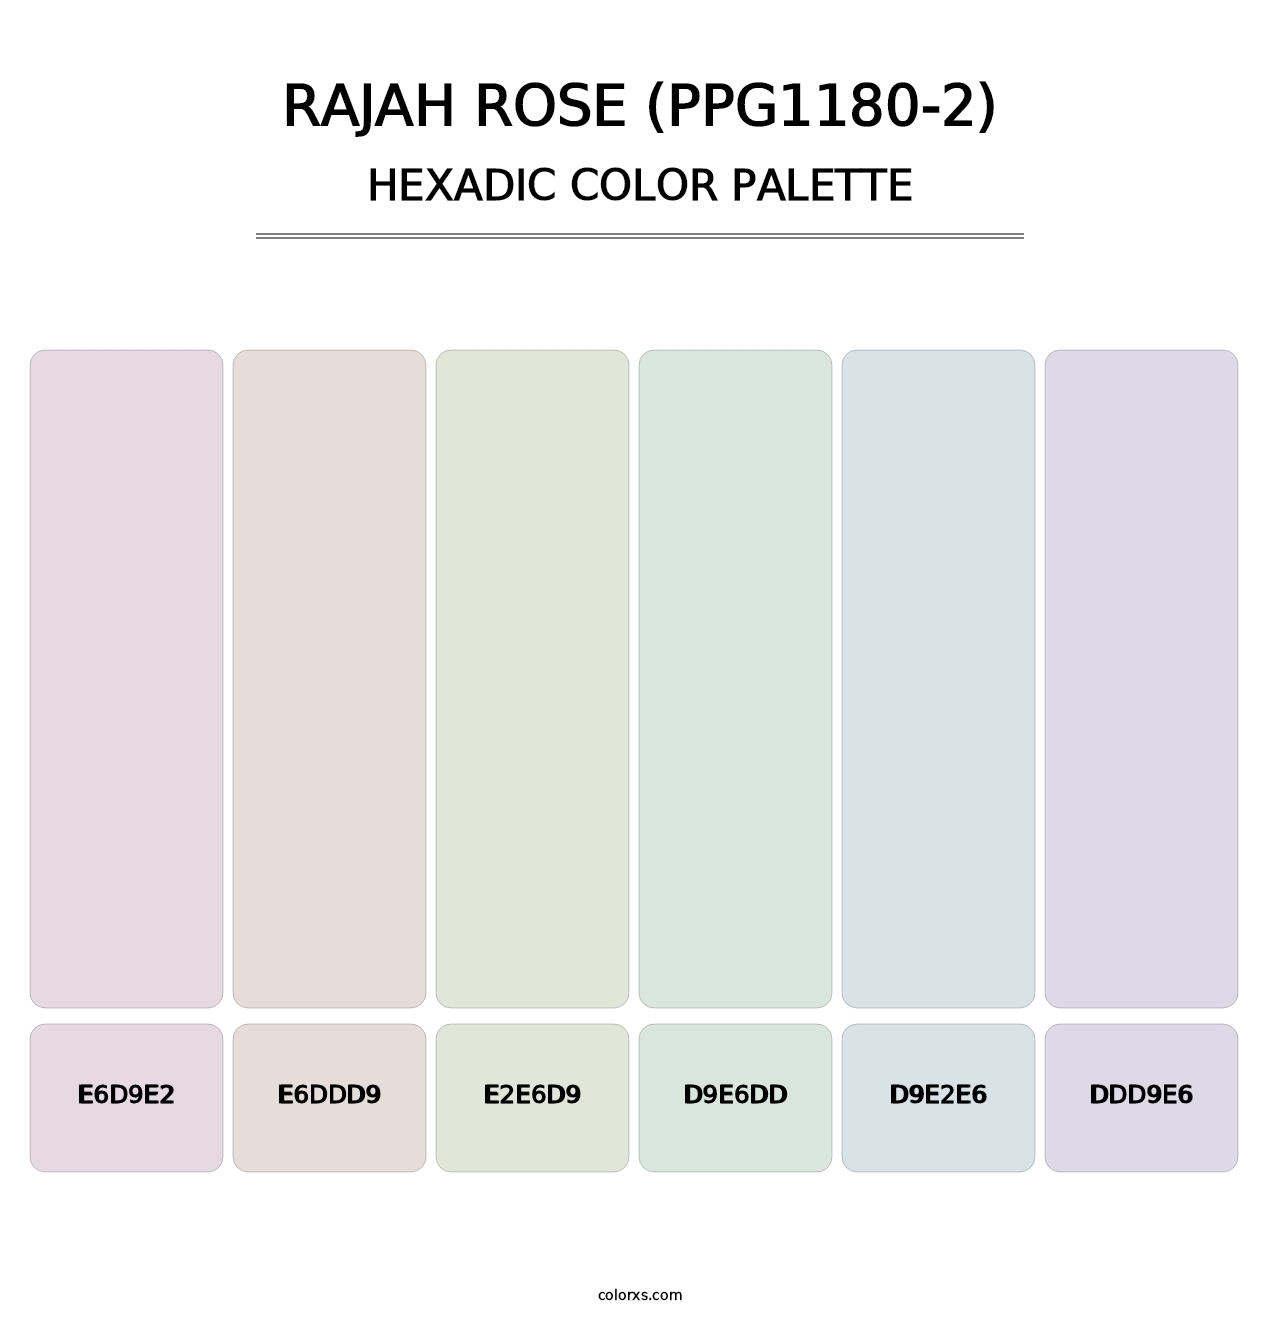 Rajah Rose (PPG1180-2) - Hexadic Color Palette